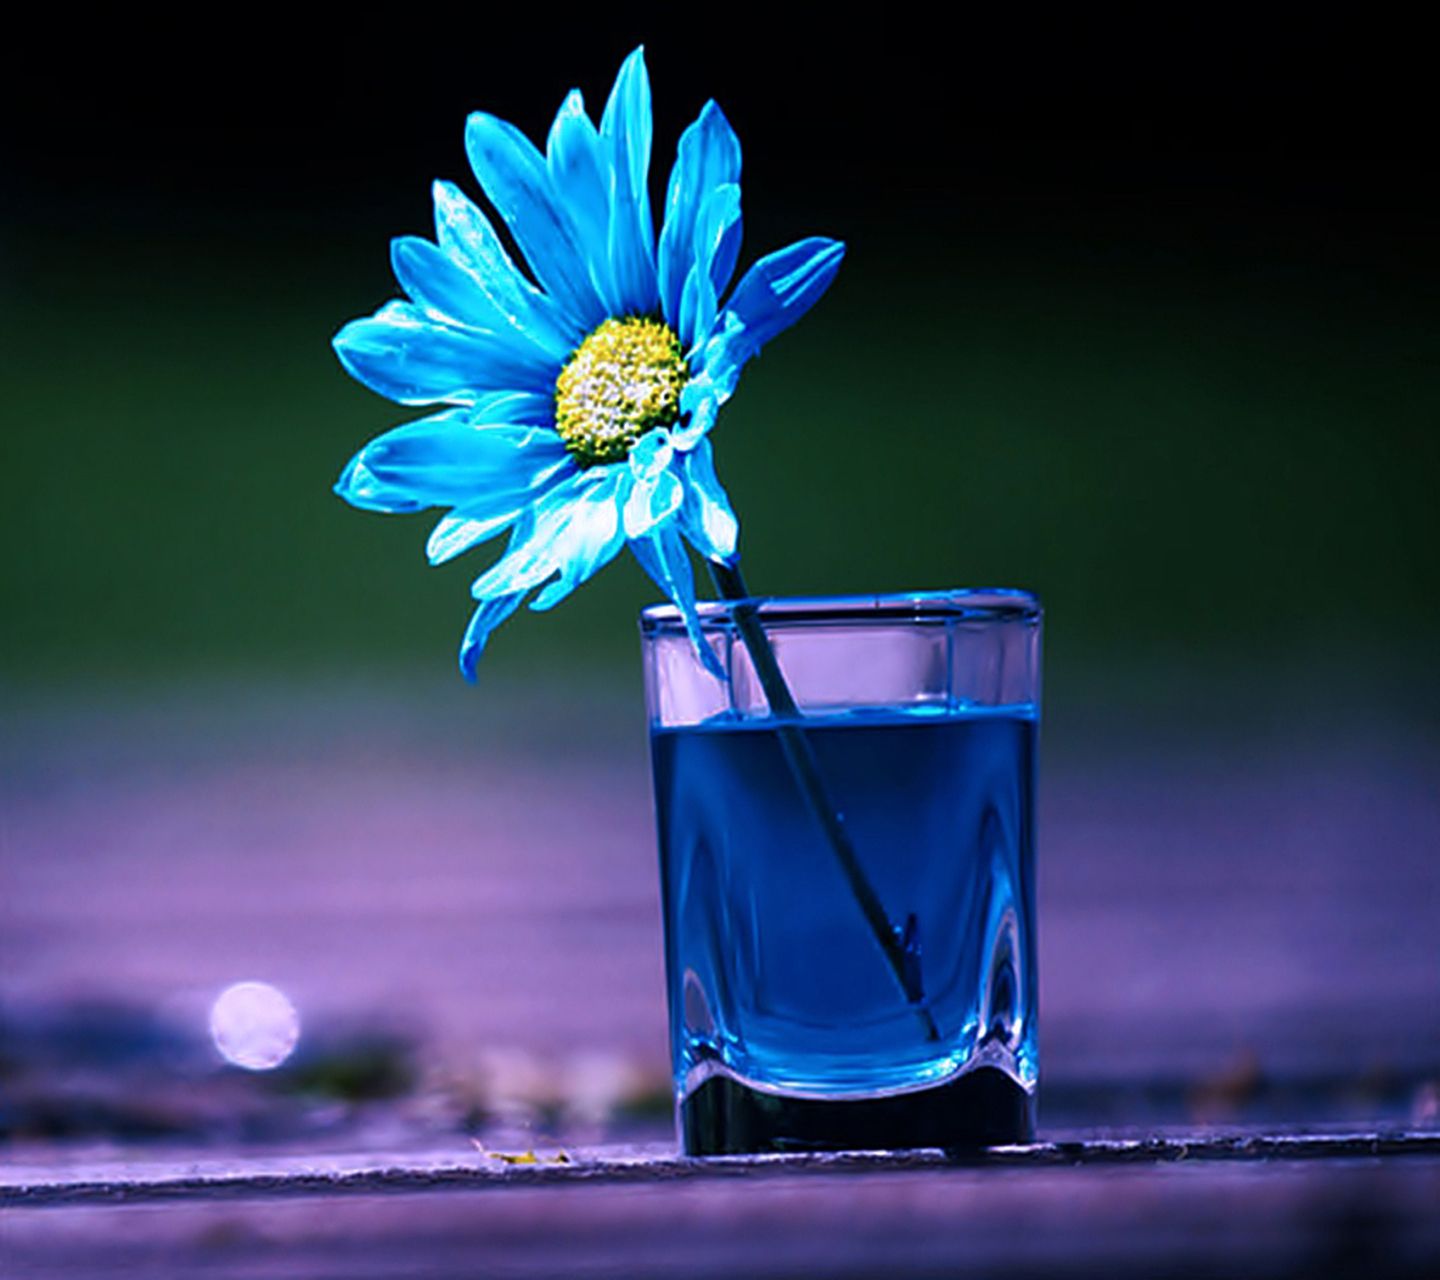 wallpapers for mobile phones,blue,cobalt blue,drink,still life photography,flower